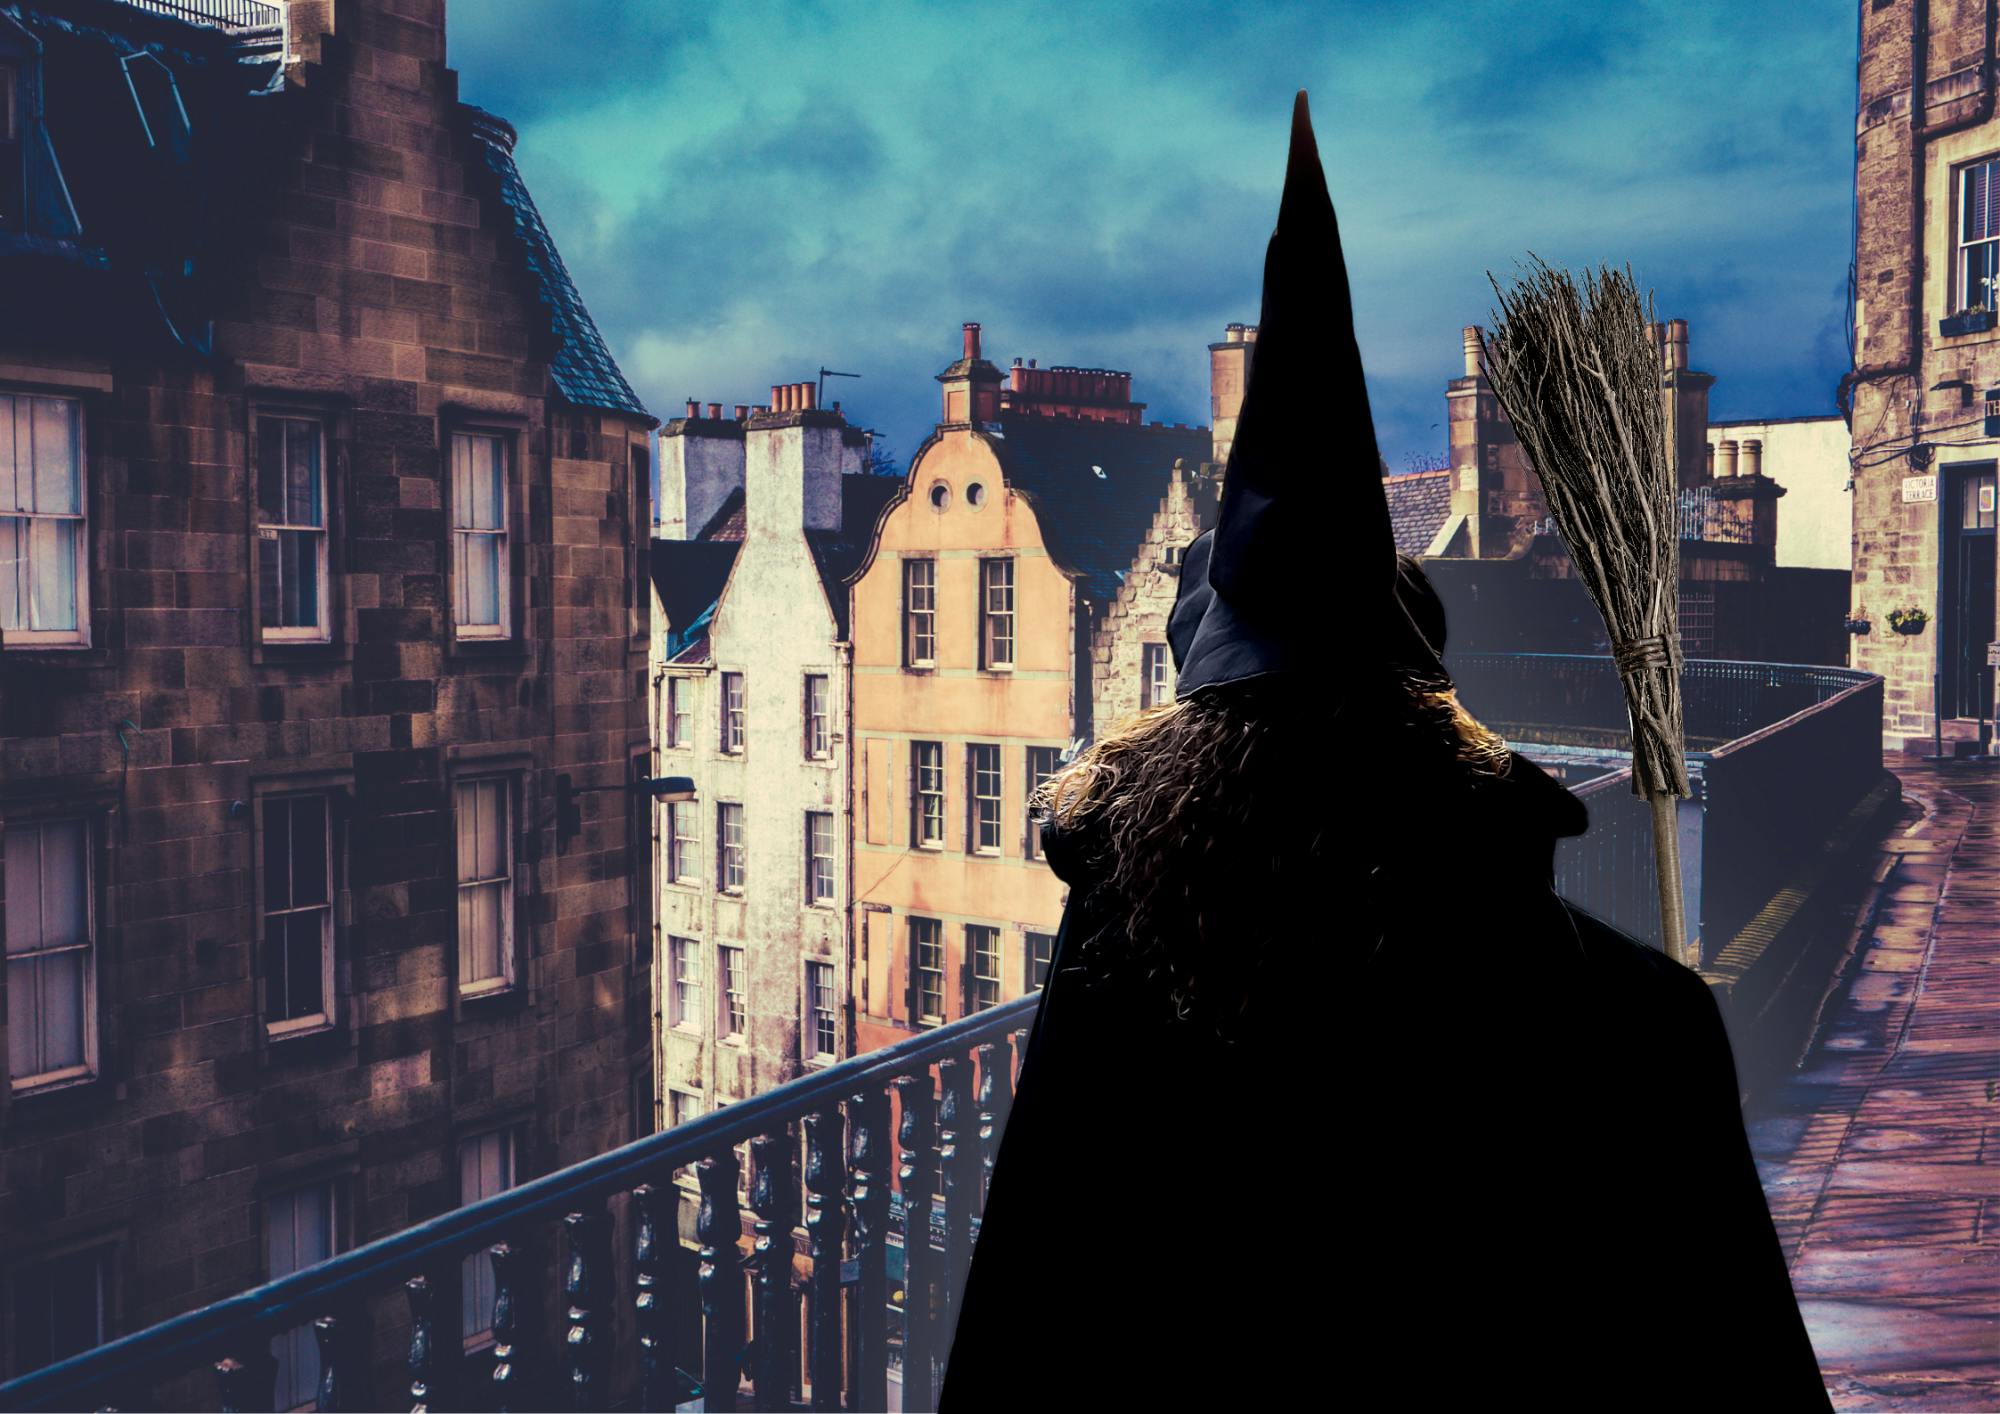 Edinburgh heksen oude stadswandeling en ondergrondse kluis